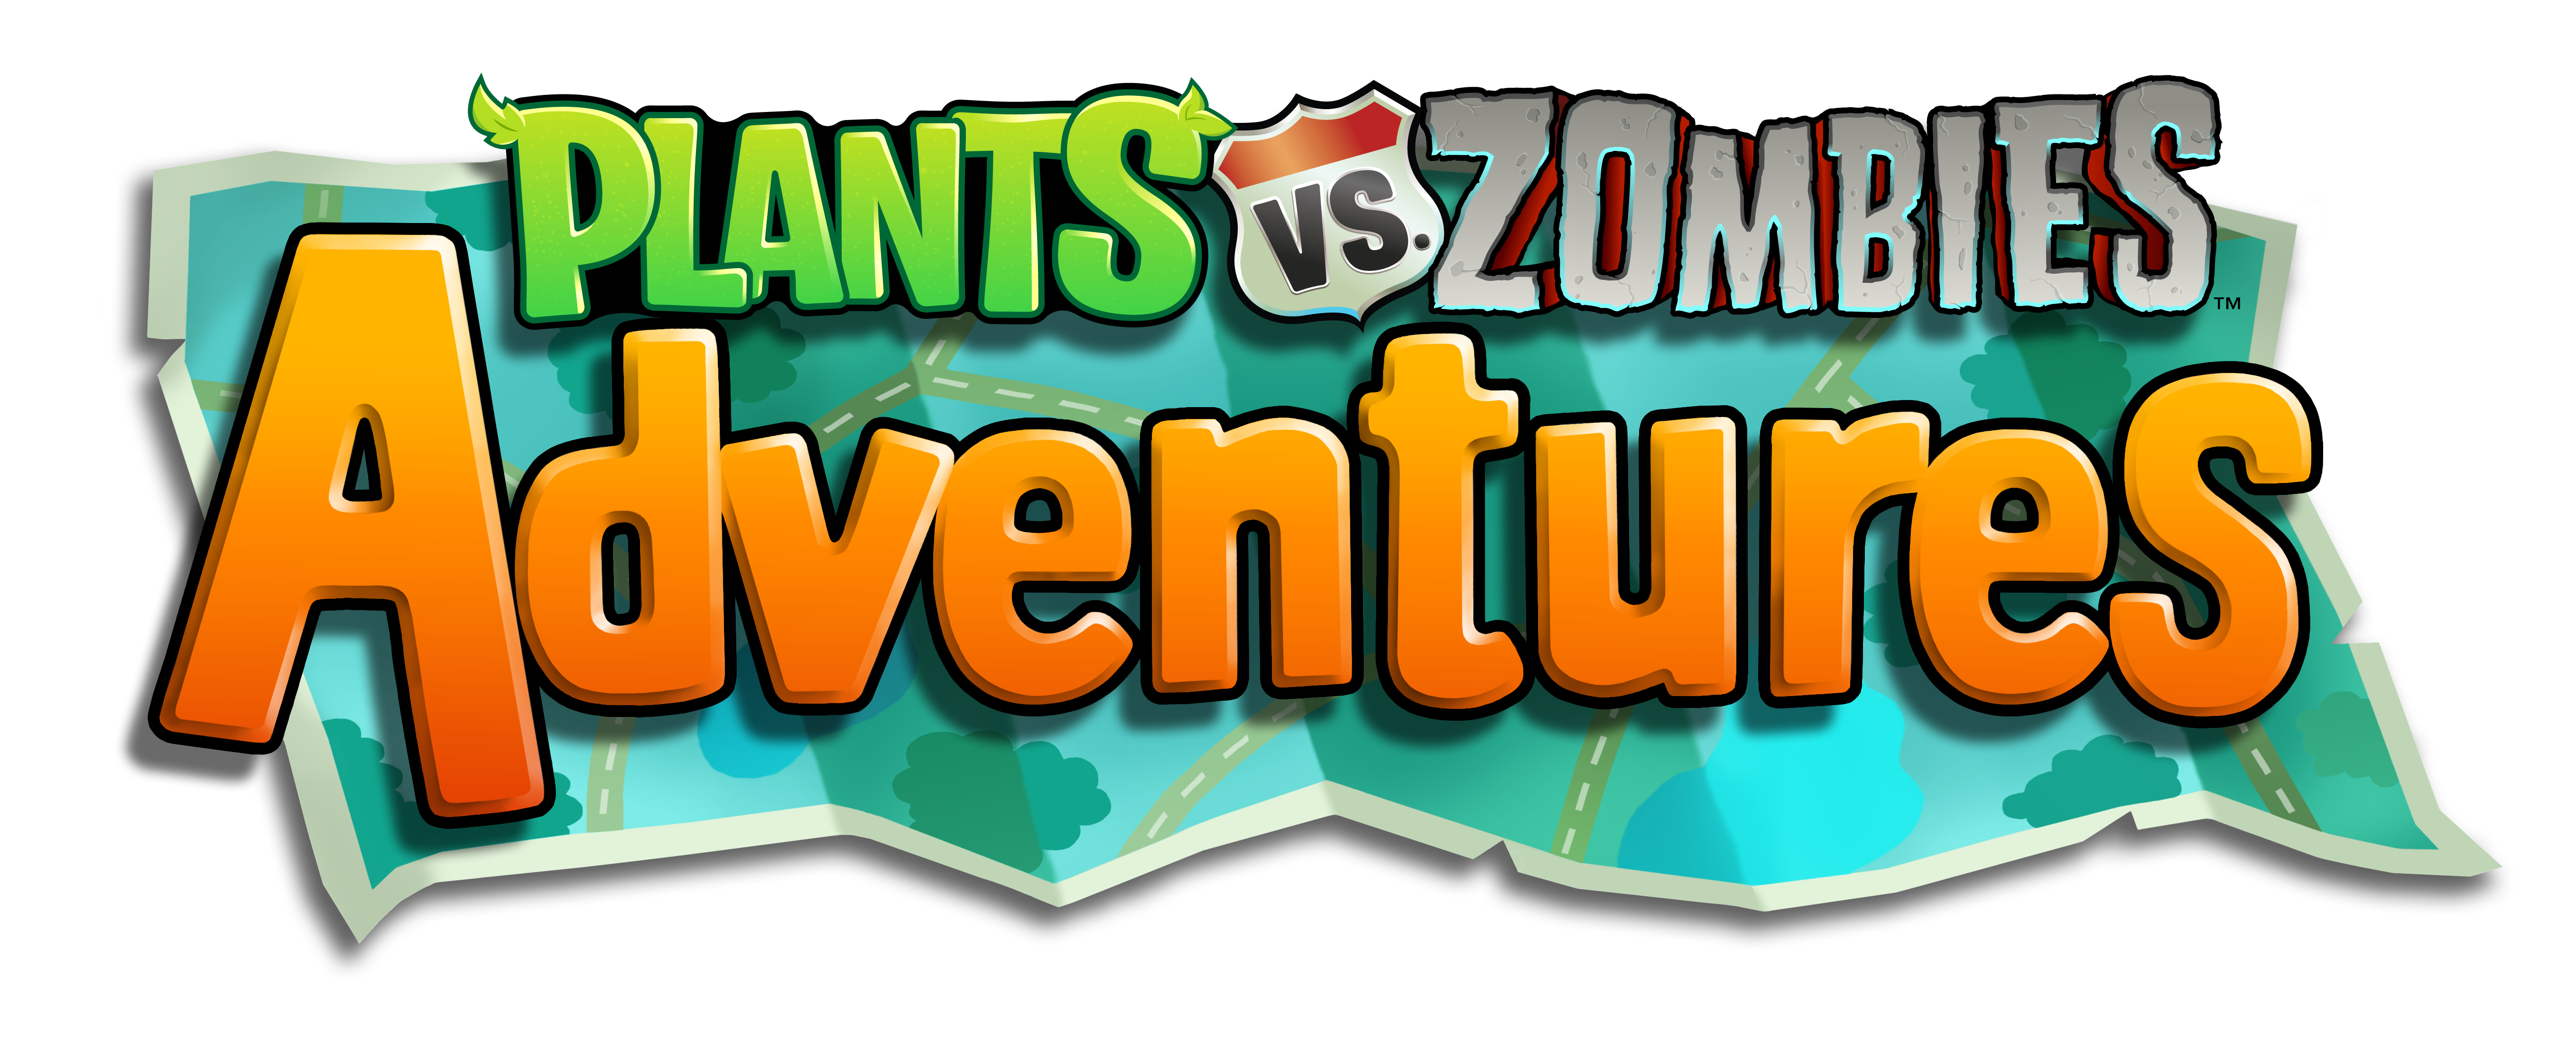 Plants vs. Zombies Wiki:Battles/Plants vs Zombies, Plants vs. Zombies Wiki